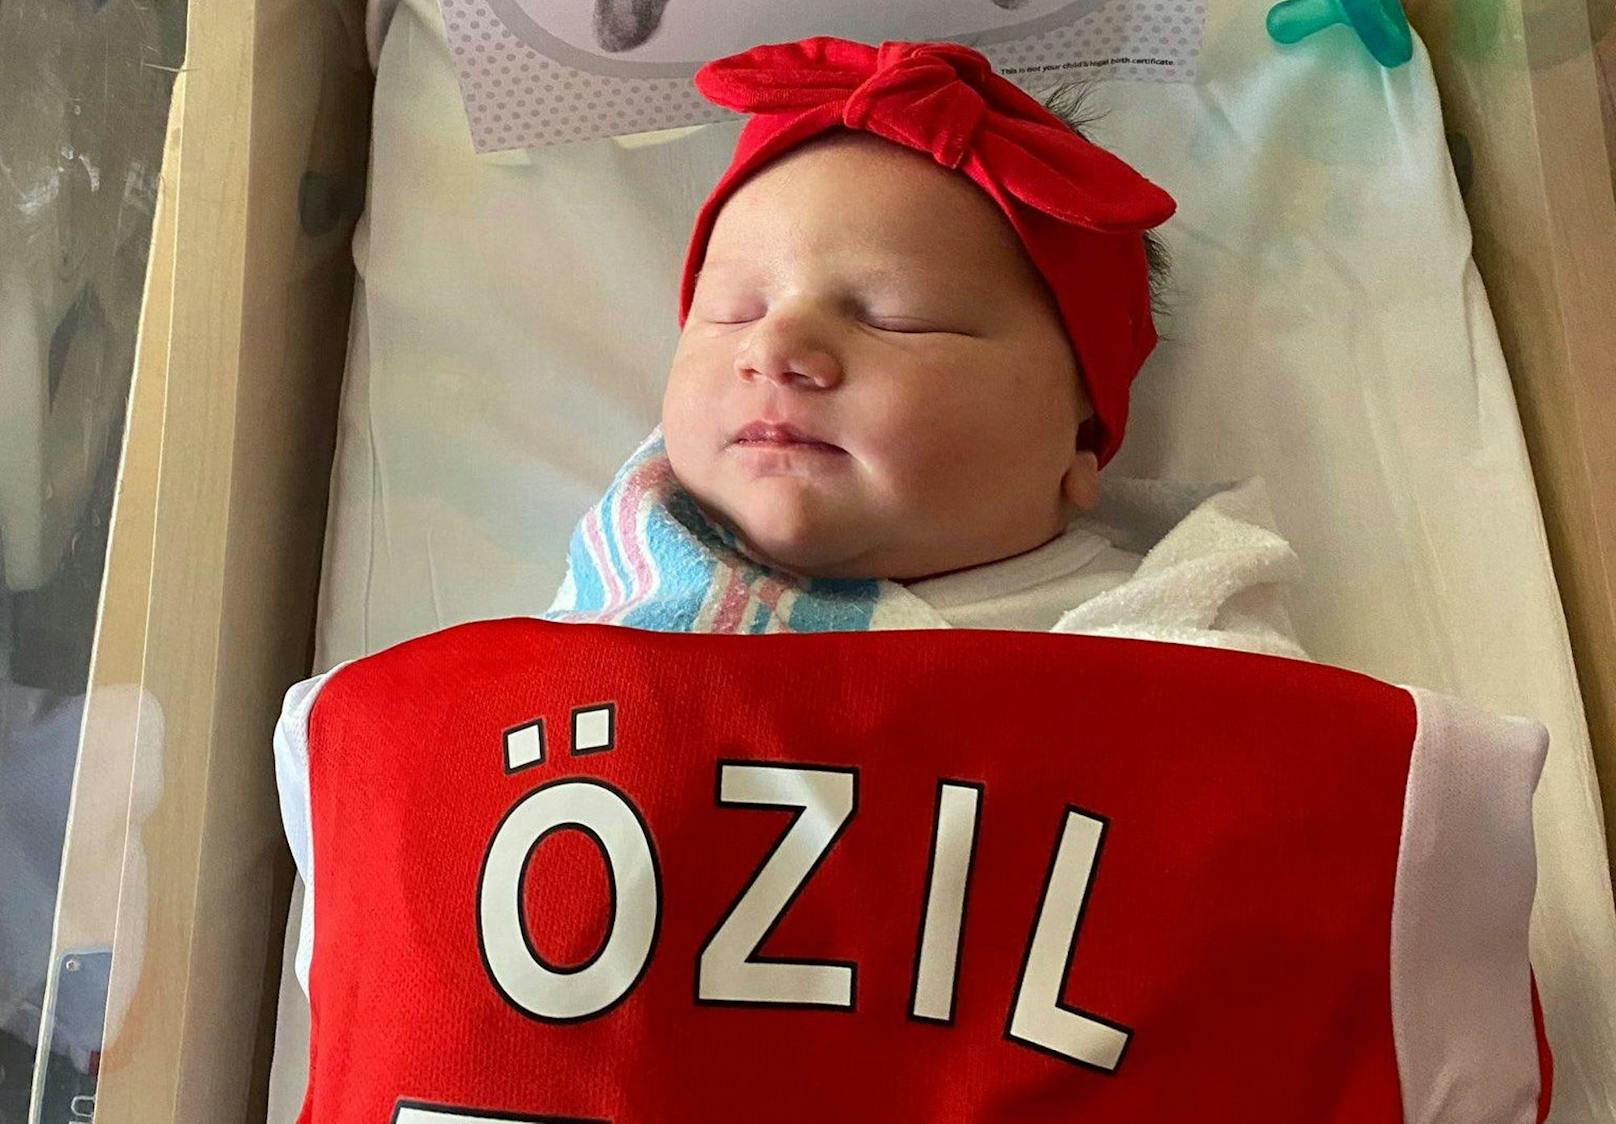 Die kleine Mara Özil wurde nach Arsenal-Kicker Mesut Özil benannt.